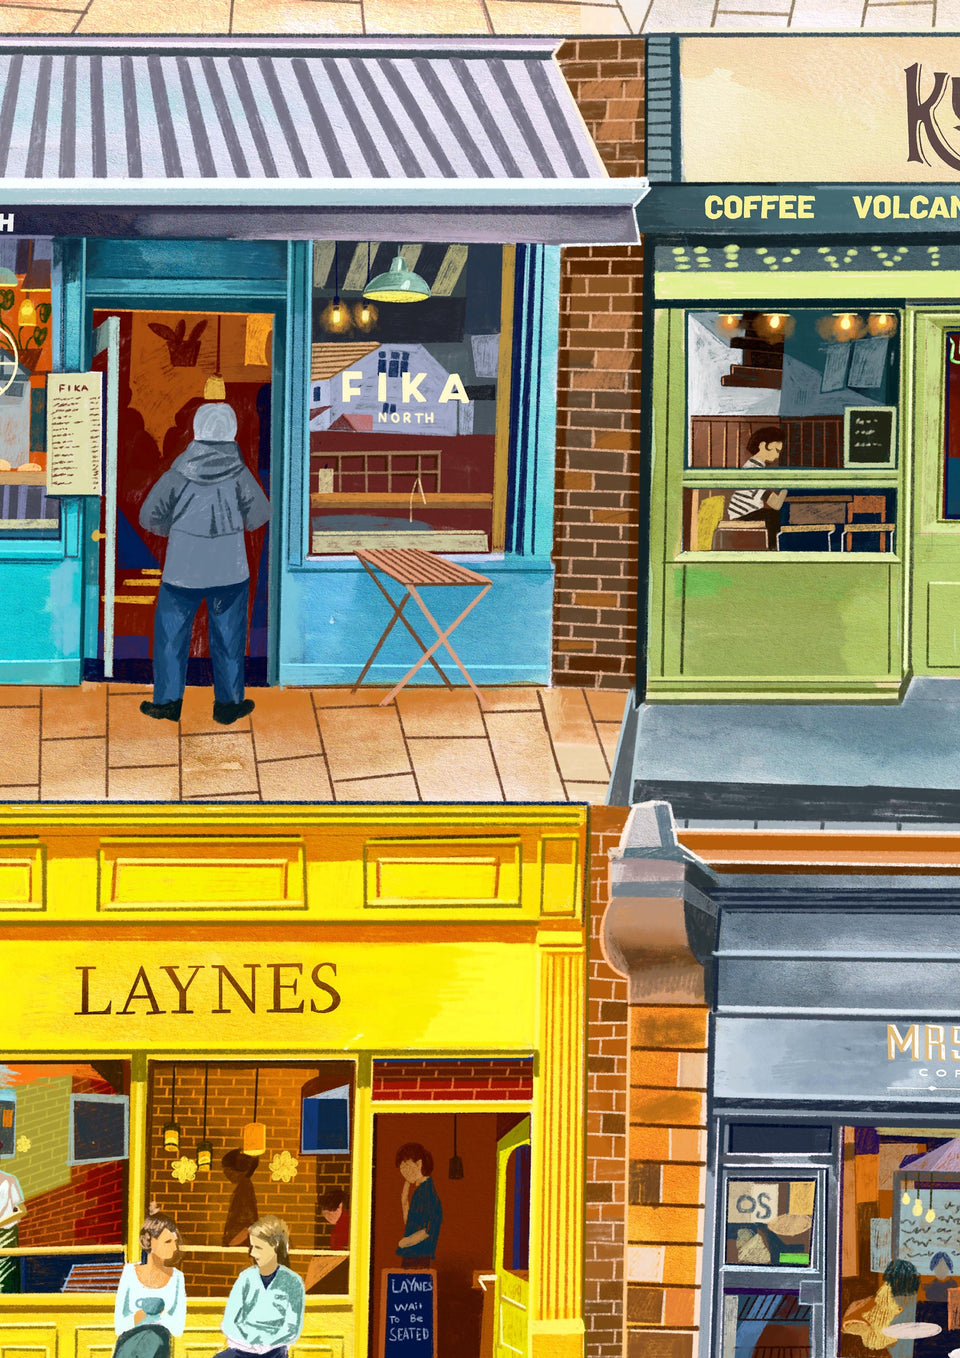 Leeds Cafes Artwork Print, Coffee On The Crescent, Wapentake, Fika North, Kulture, Laynes, Mrs Atha’s, Leeds Illustration